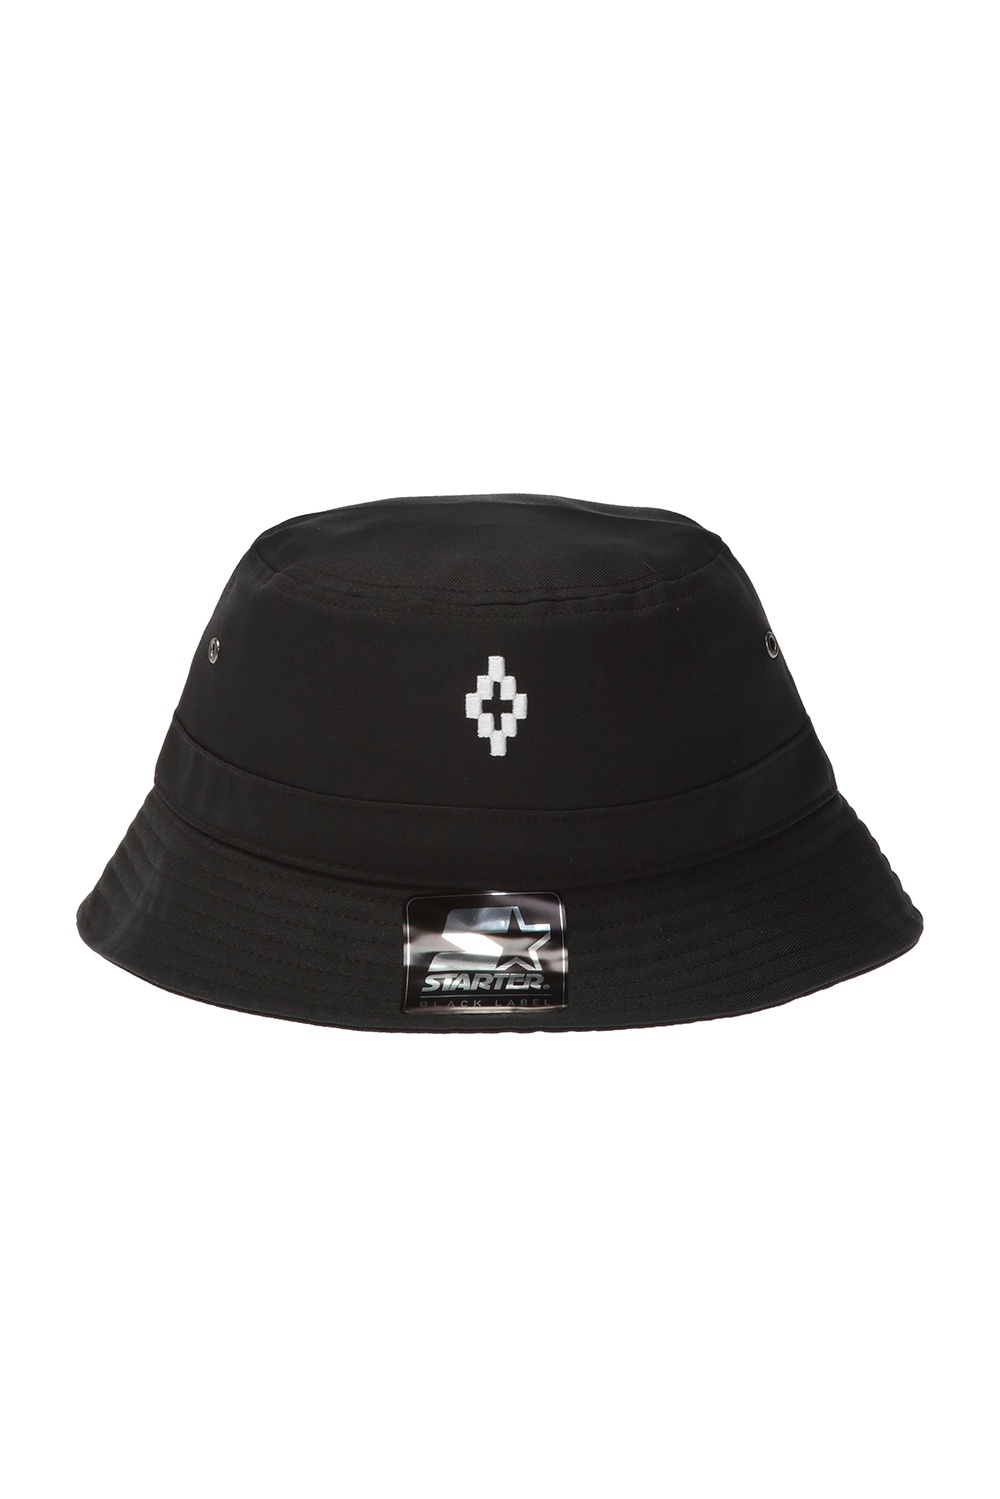 Hat logo Marcelo Burlon - Vitkac Singapore